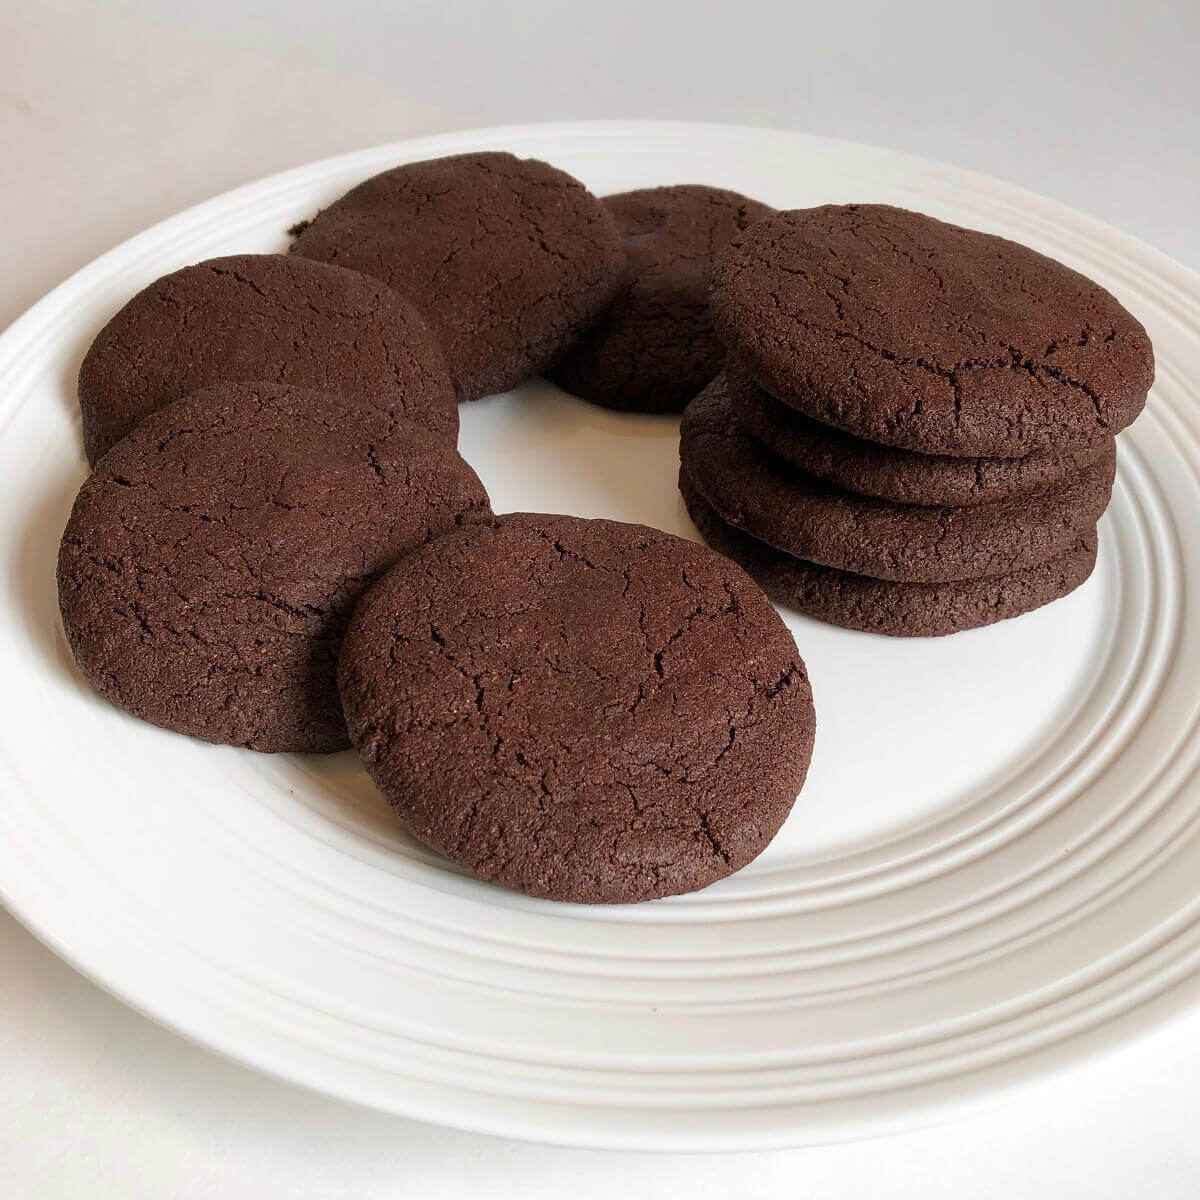 Nine chocolate cookies displayed on a white plate.